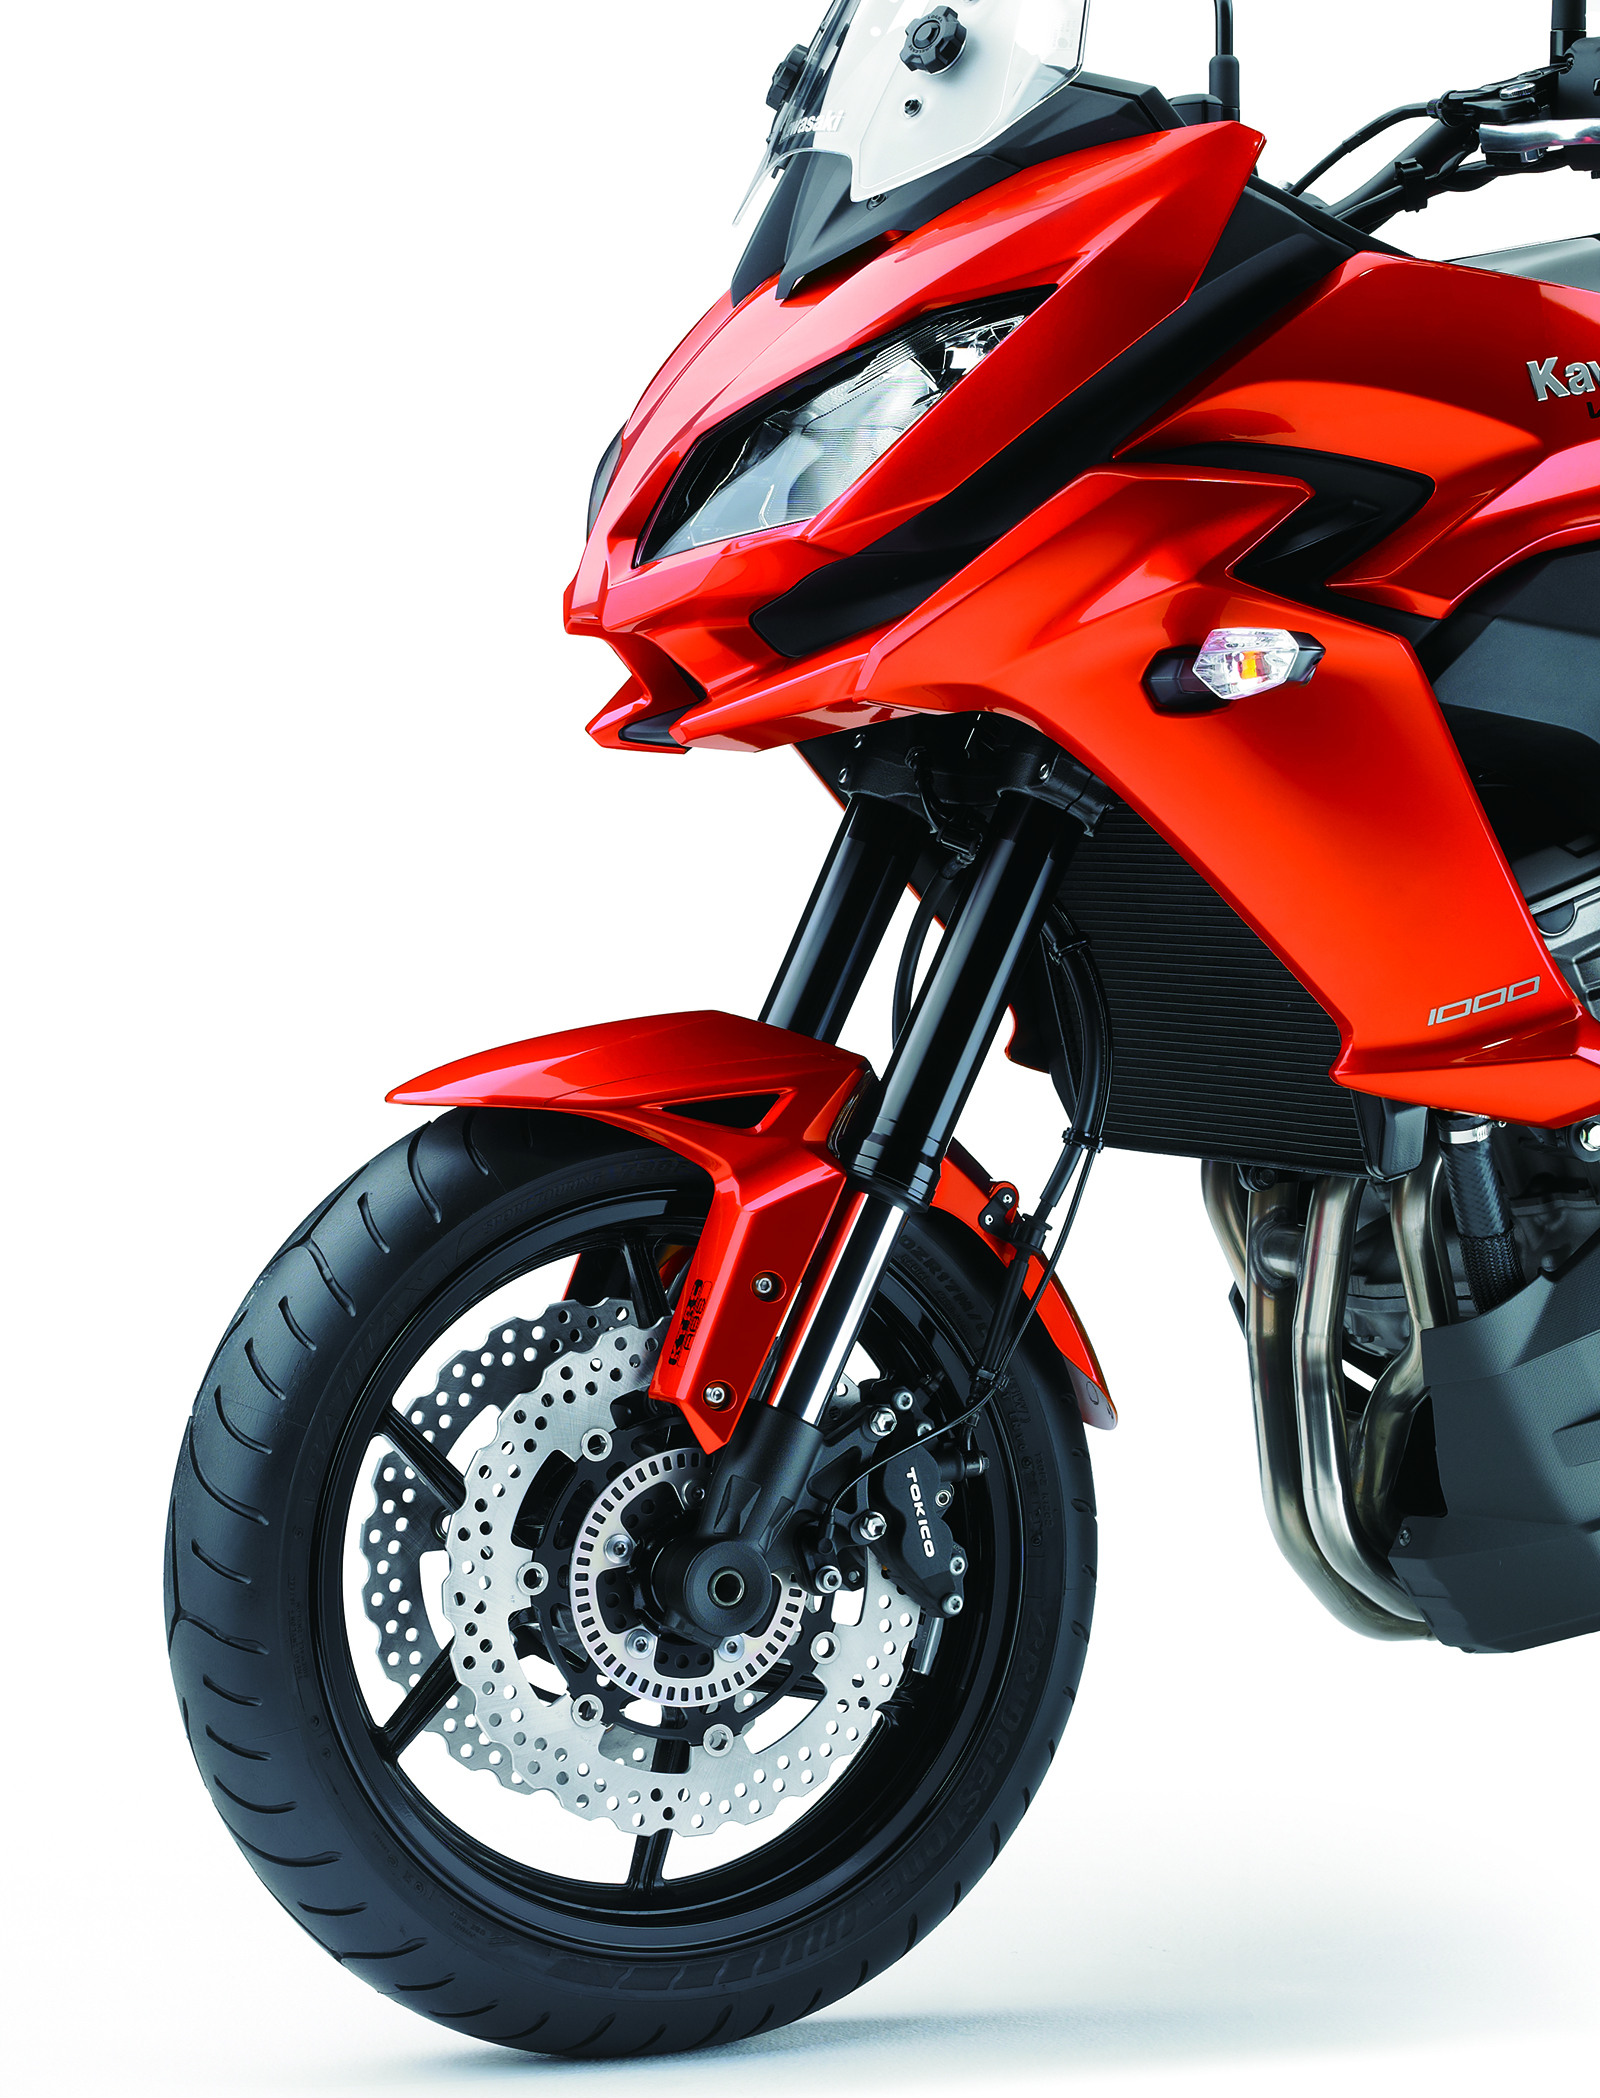 Intermot 2014: new Kawasaki Versys 1000 unveiled